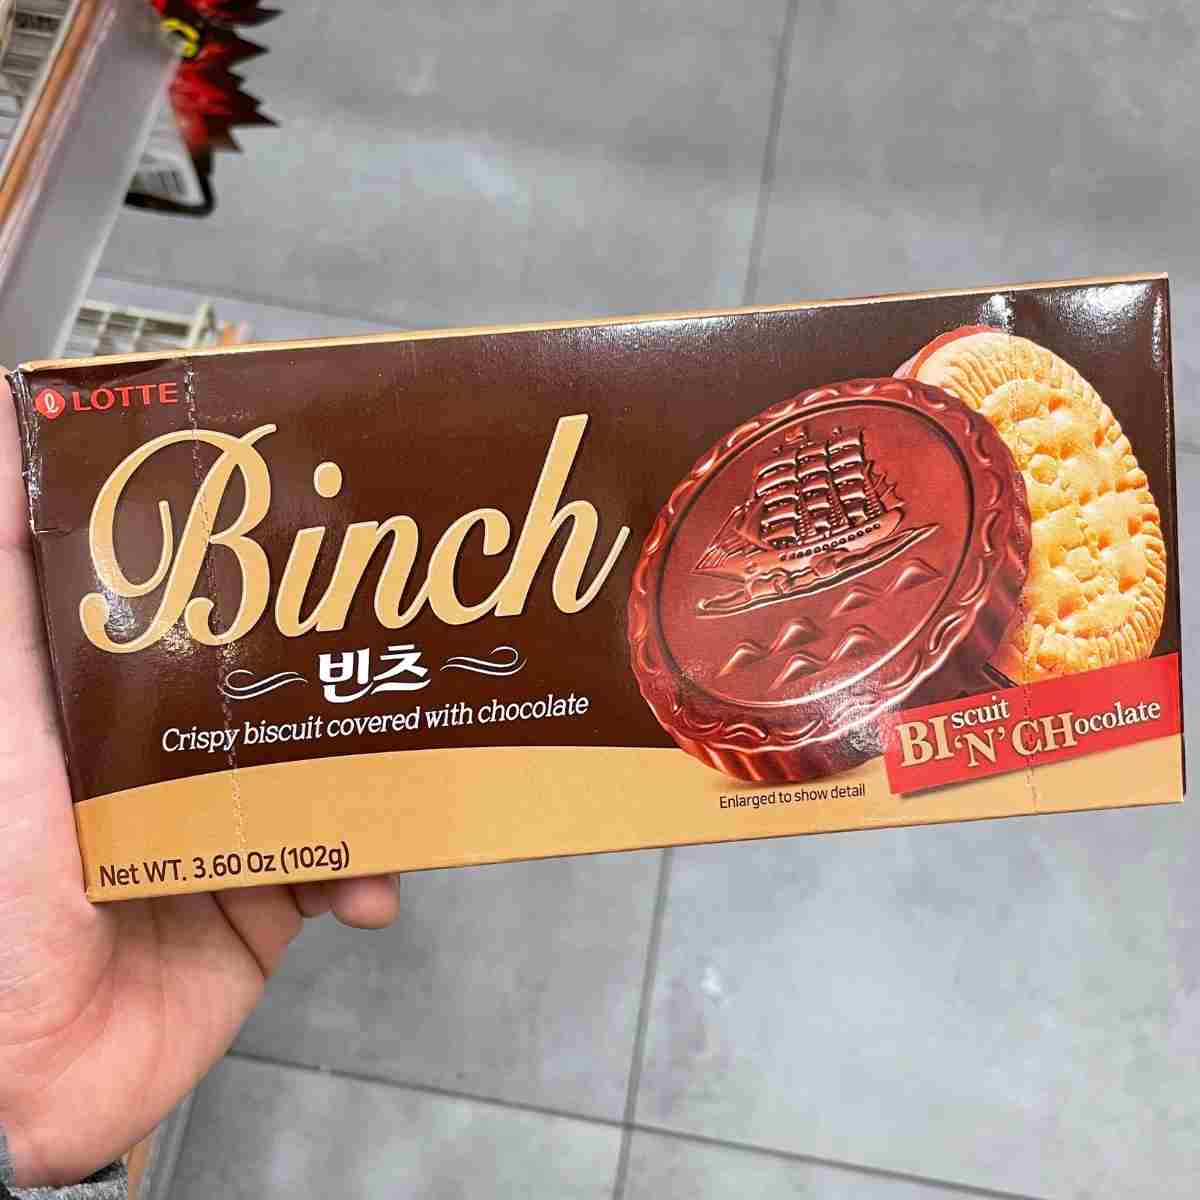 Lotte chocolate binch biscuits